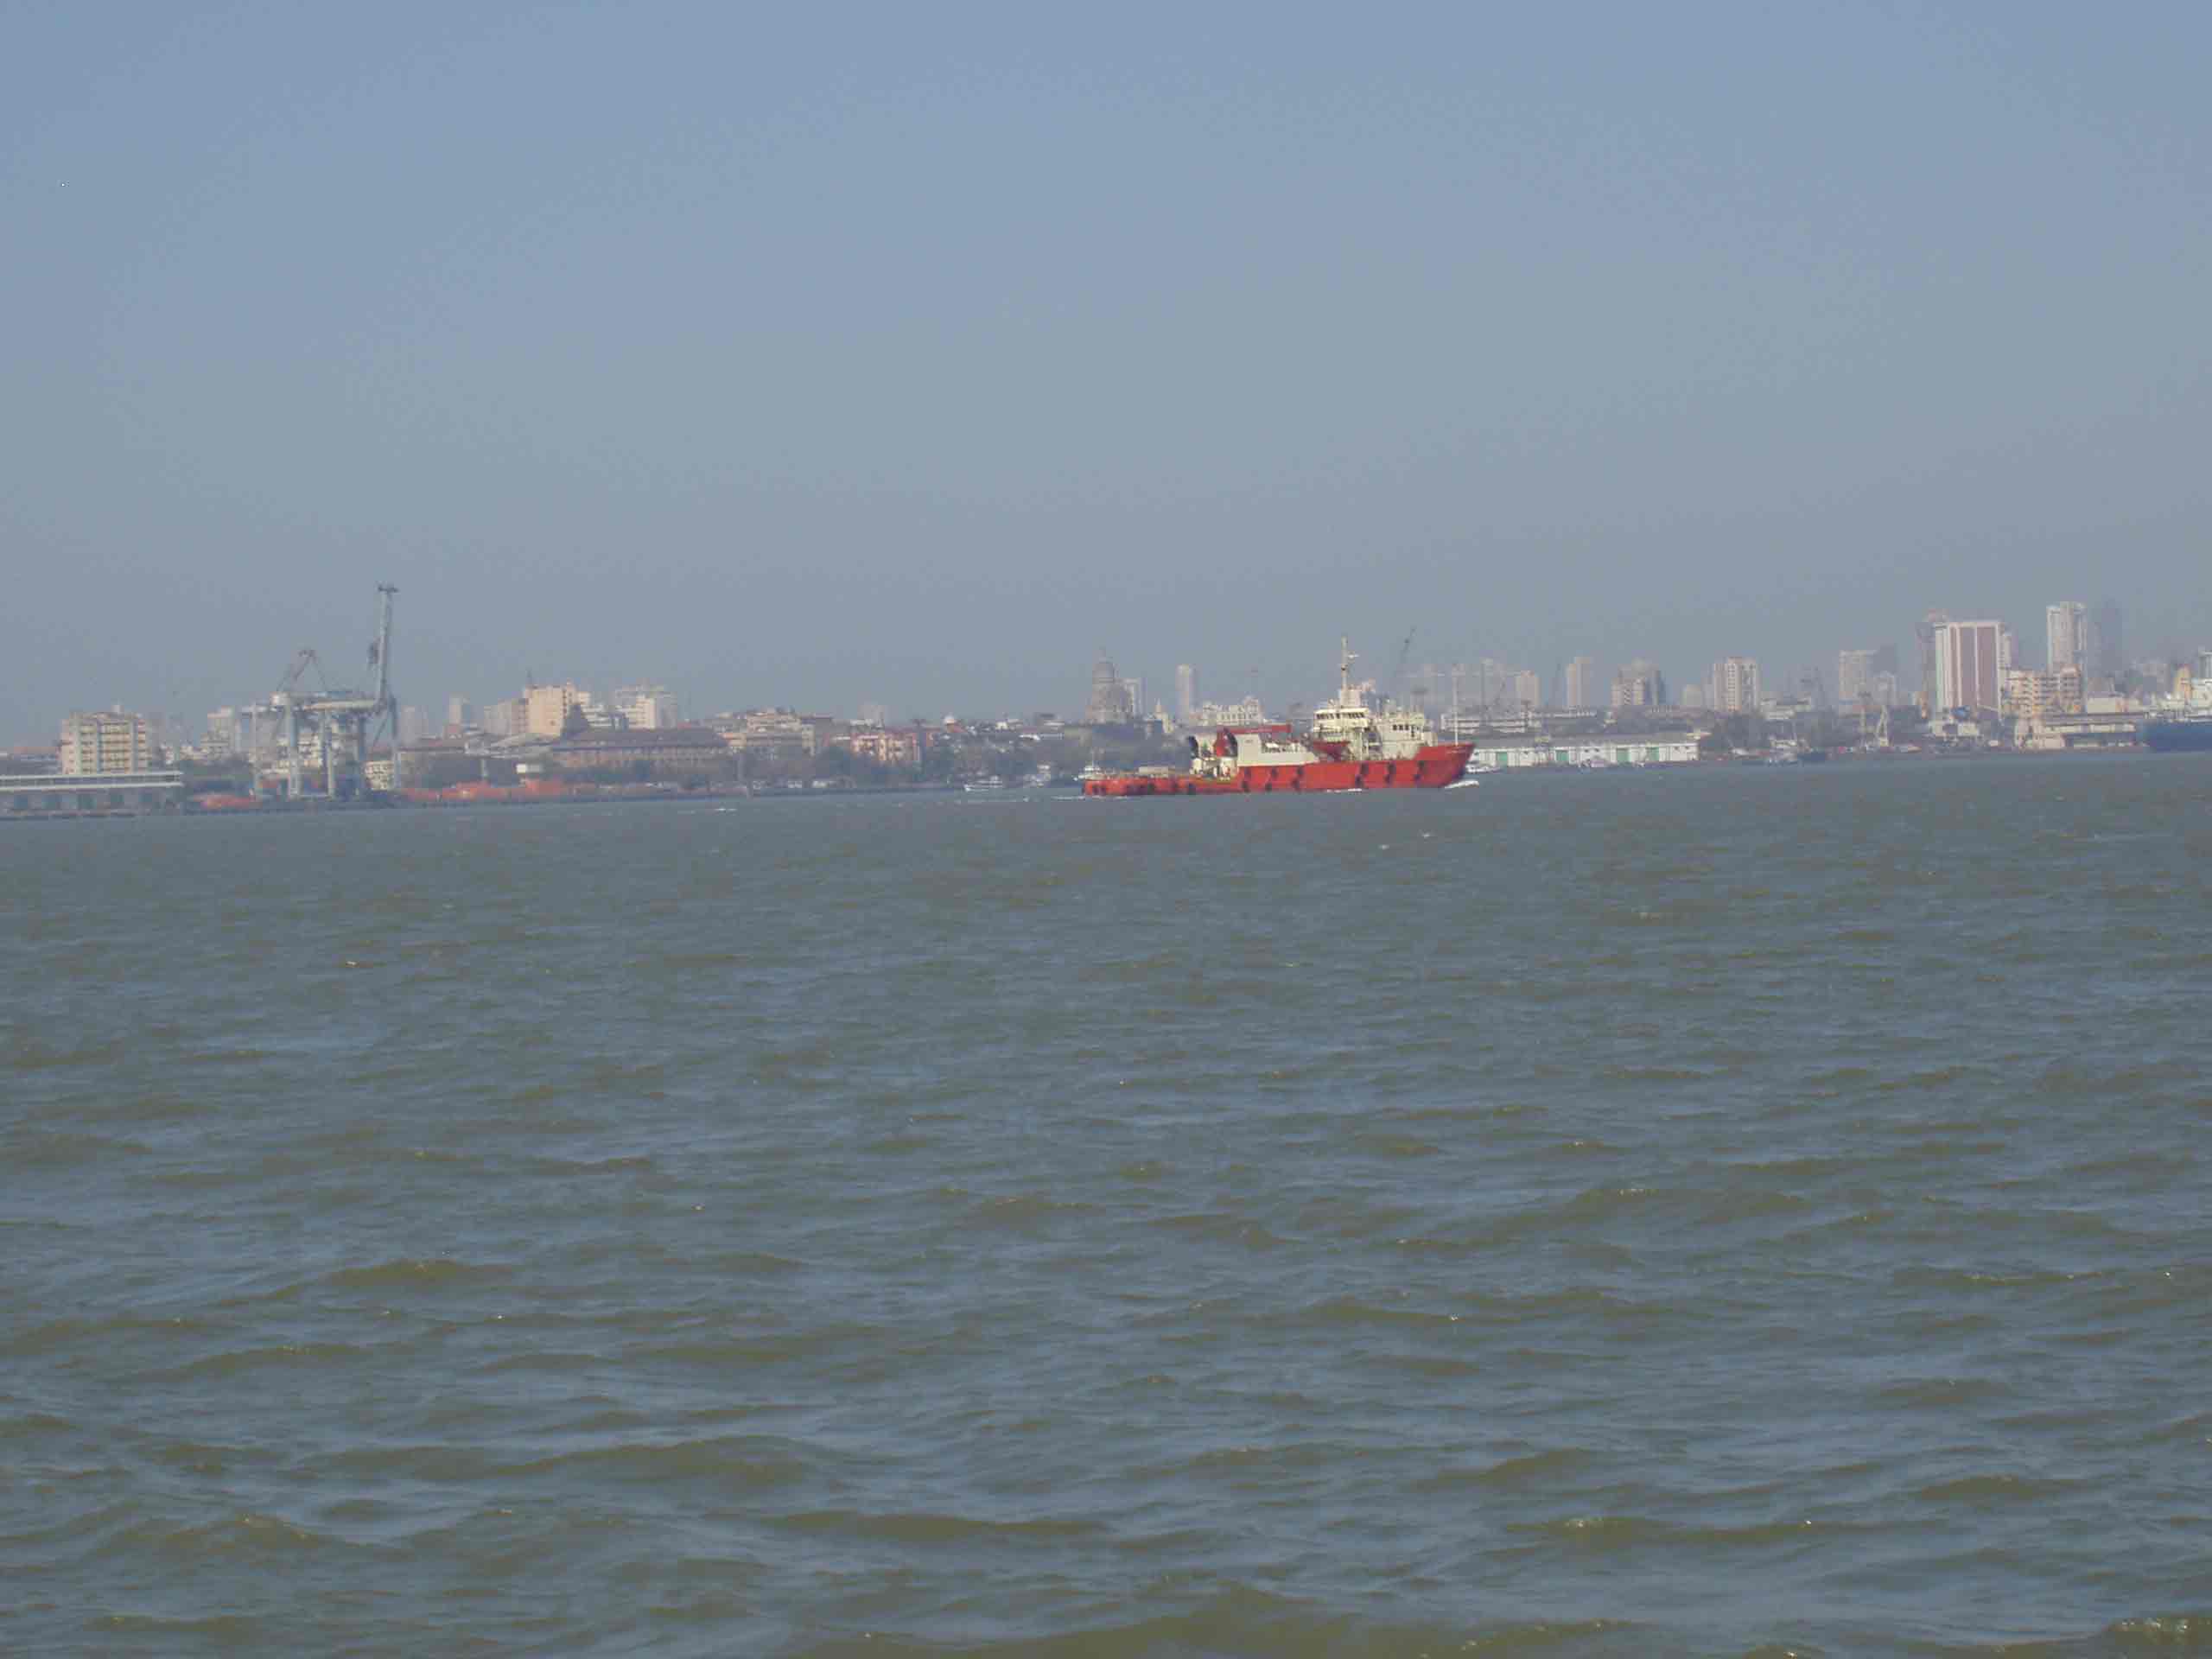 Mumbai - seen from the sea